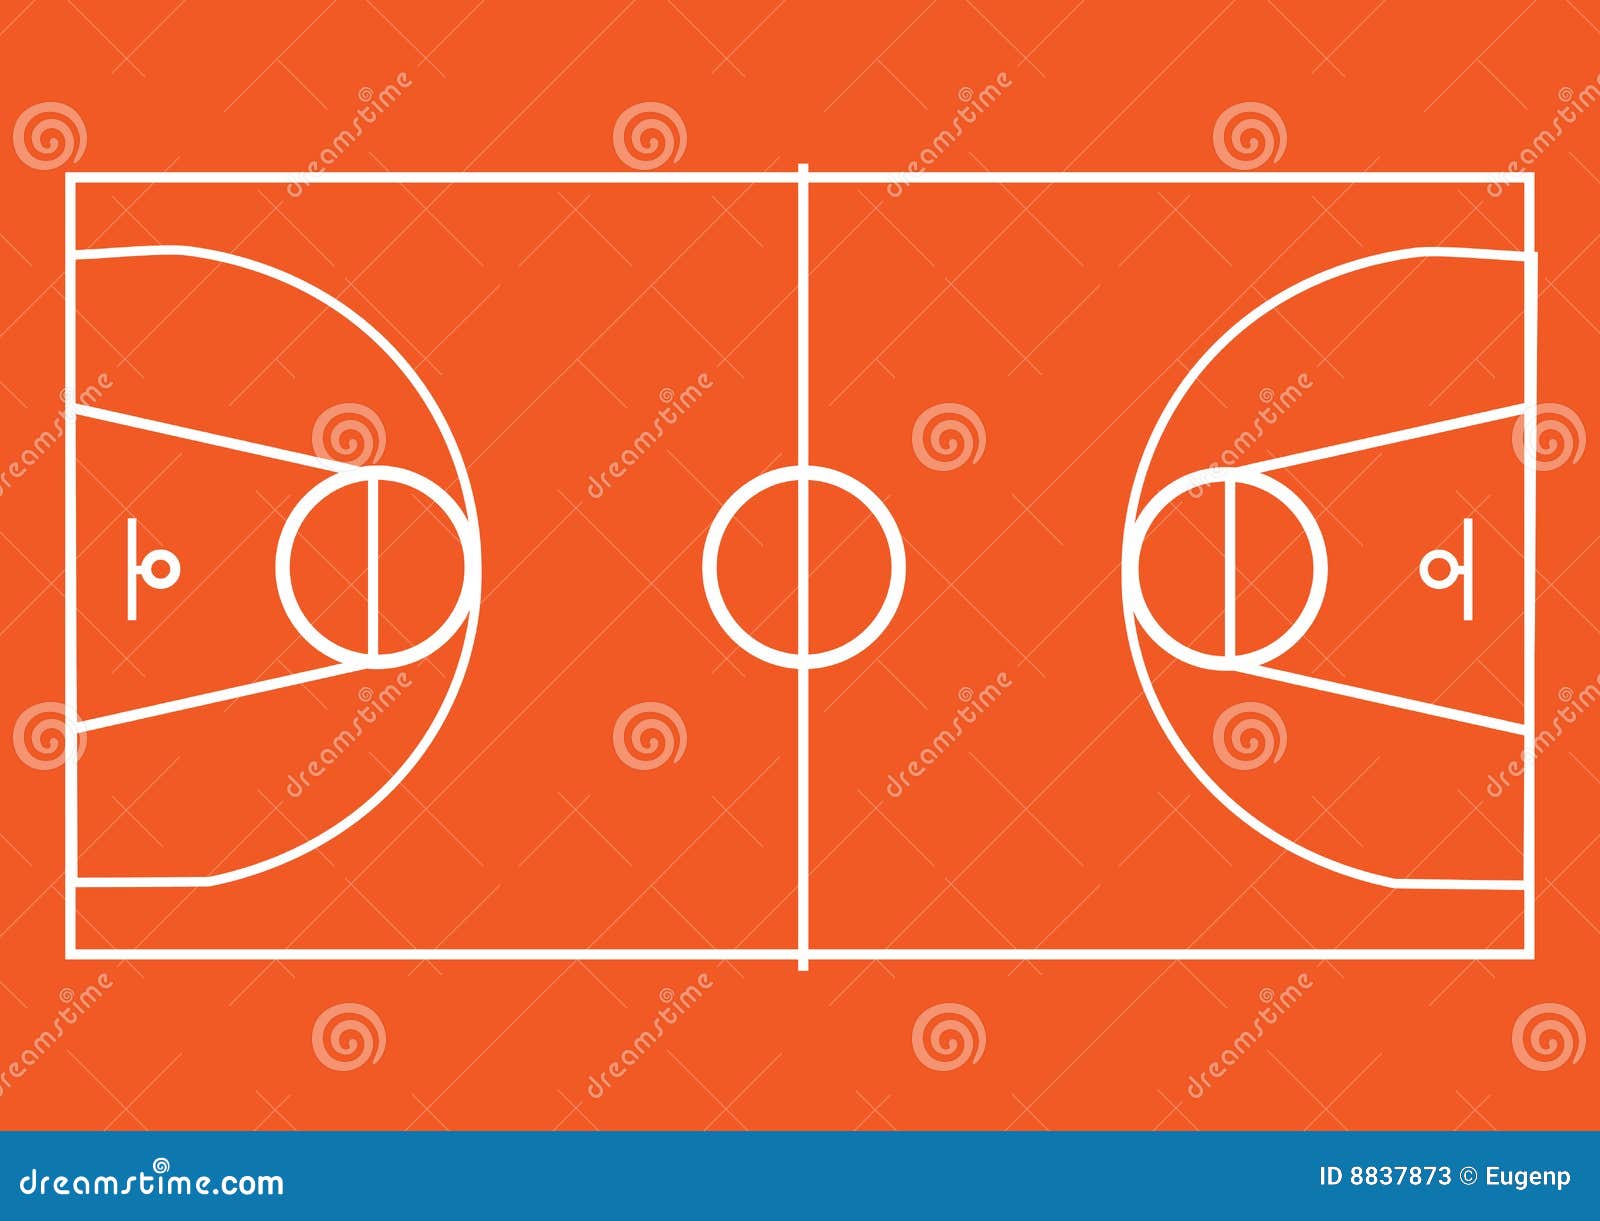 Basketball Pitch Stock Photos - Image: 8837873